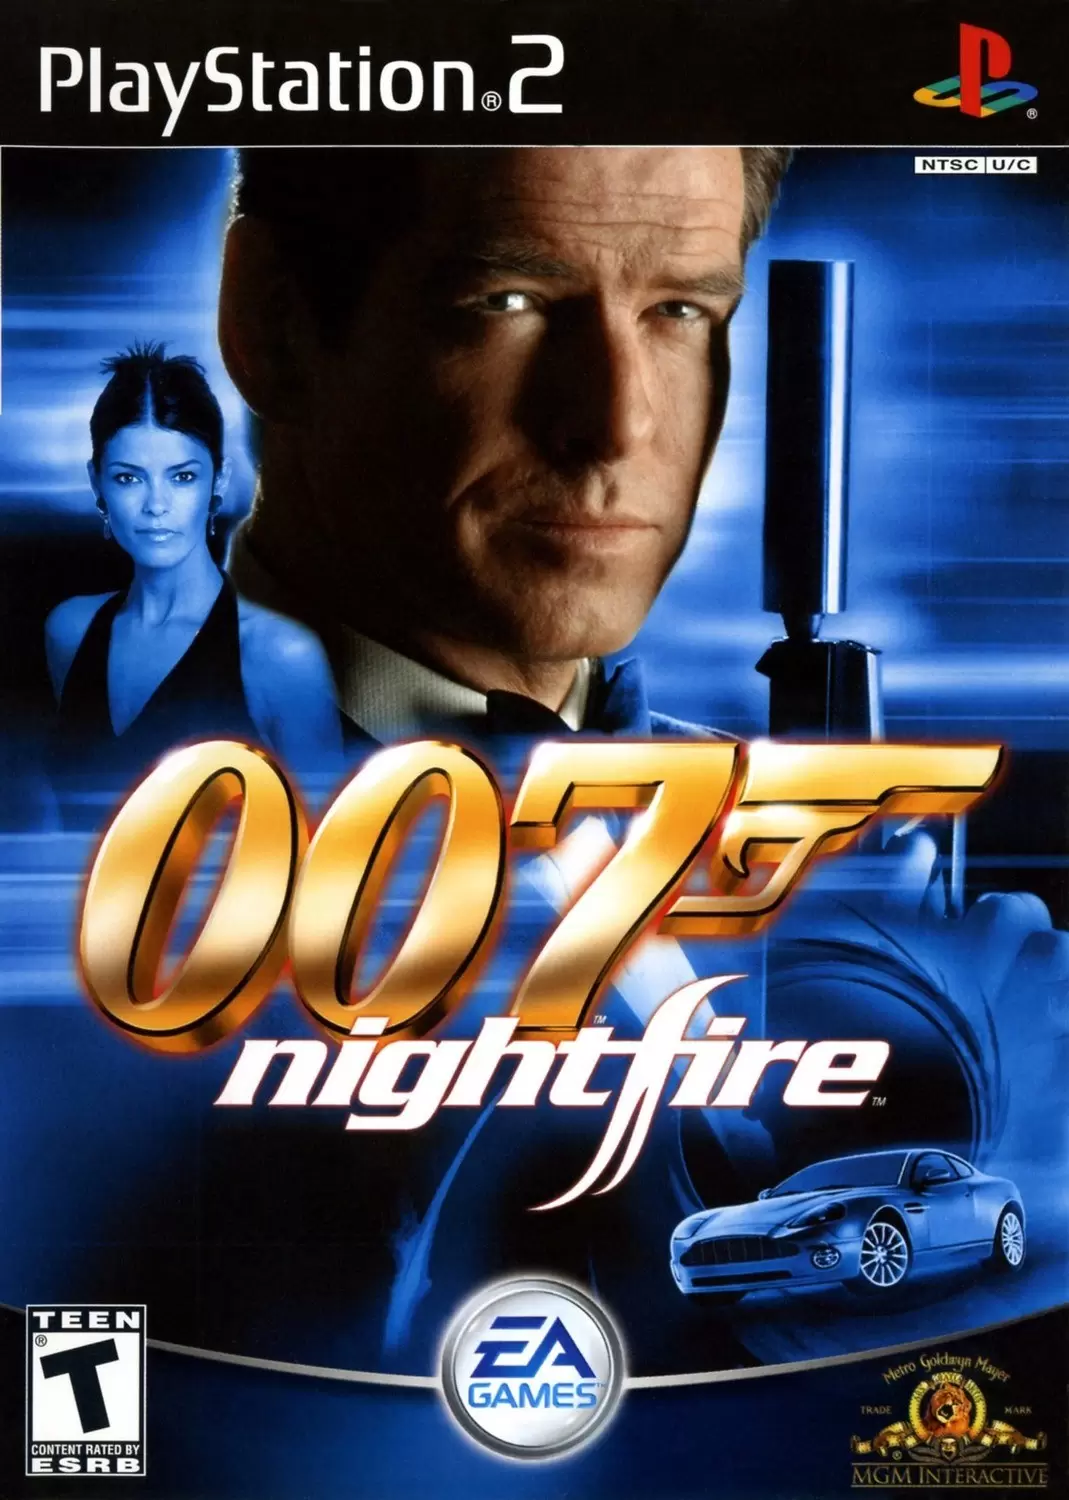 James Bond 007: Goldeneye: Special Edition (NTSC, English)